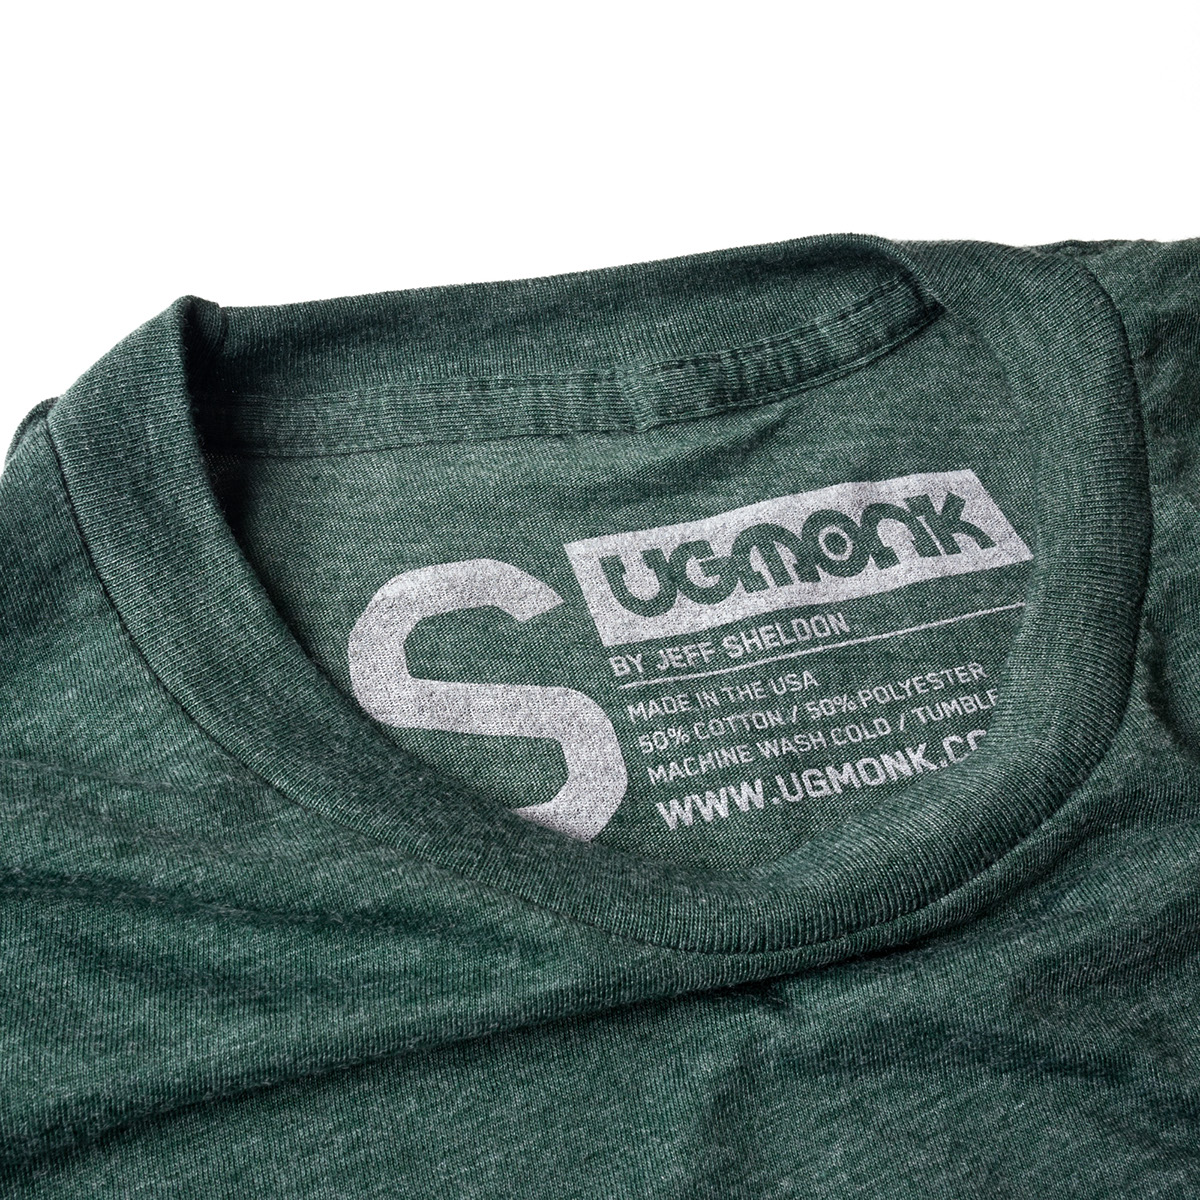 ugmonk tshirts t-shirt apparel Dot Dash geometric Minimalism minimal simple Product Photography